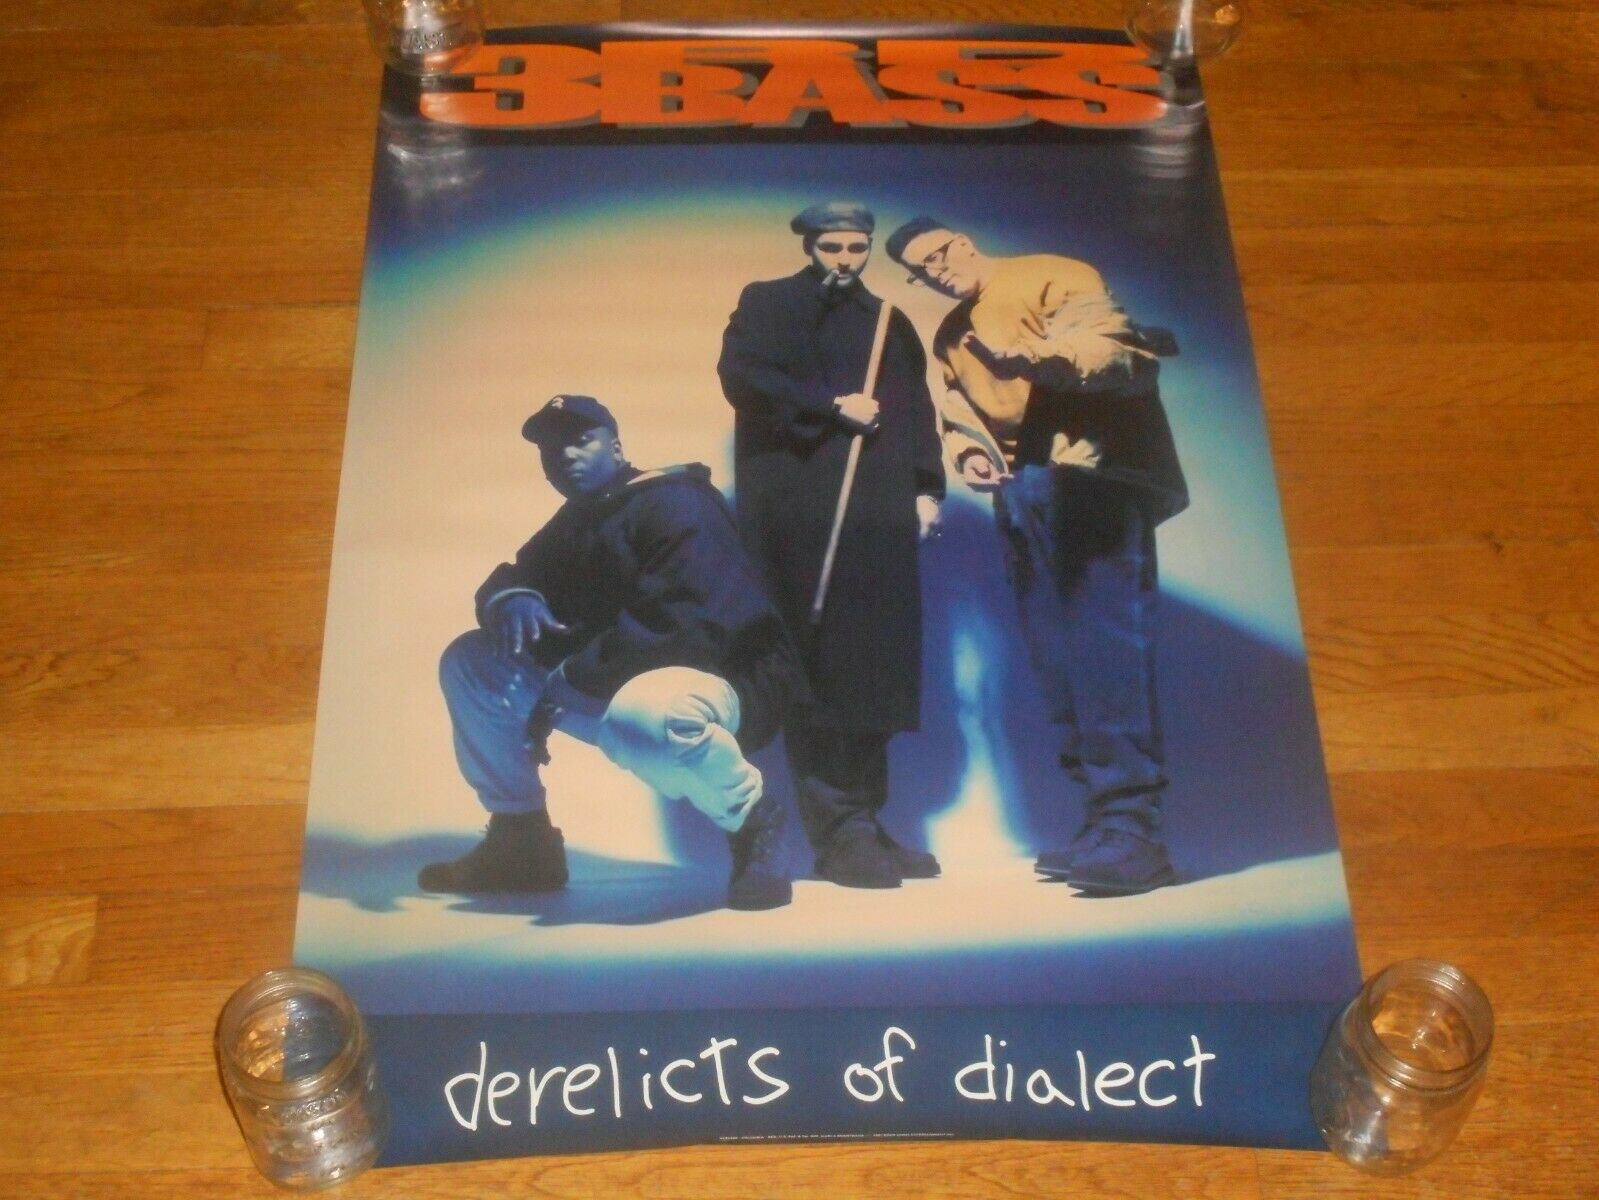 3rd Bass Derelicts Of Dialect 24 X 36 Promo Poster Original 1991 Def Jam Hip Hop